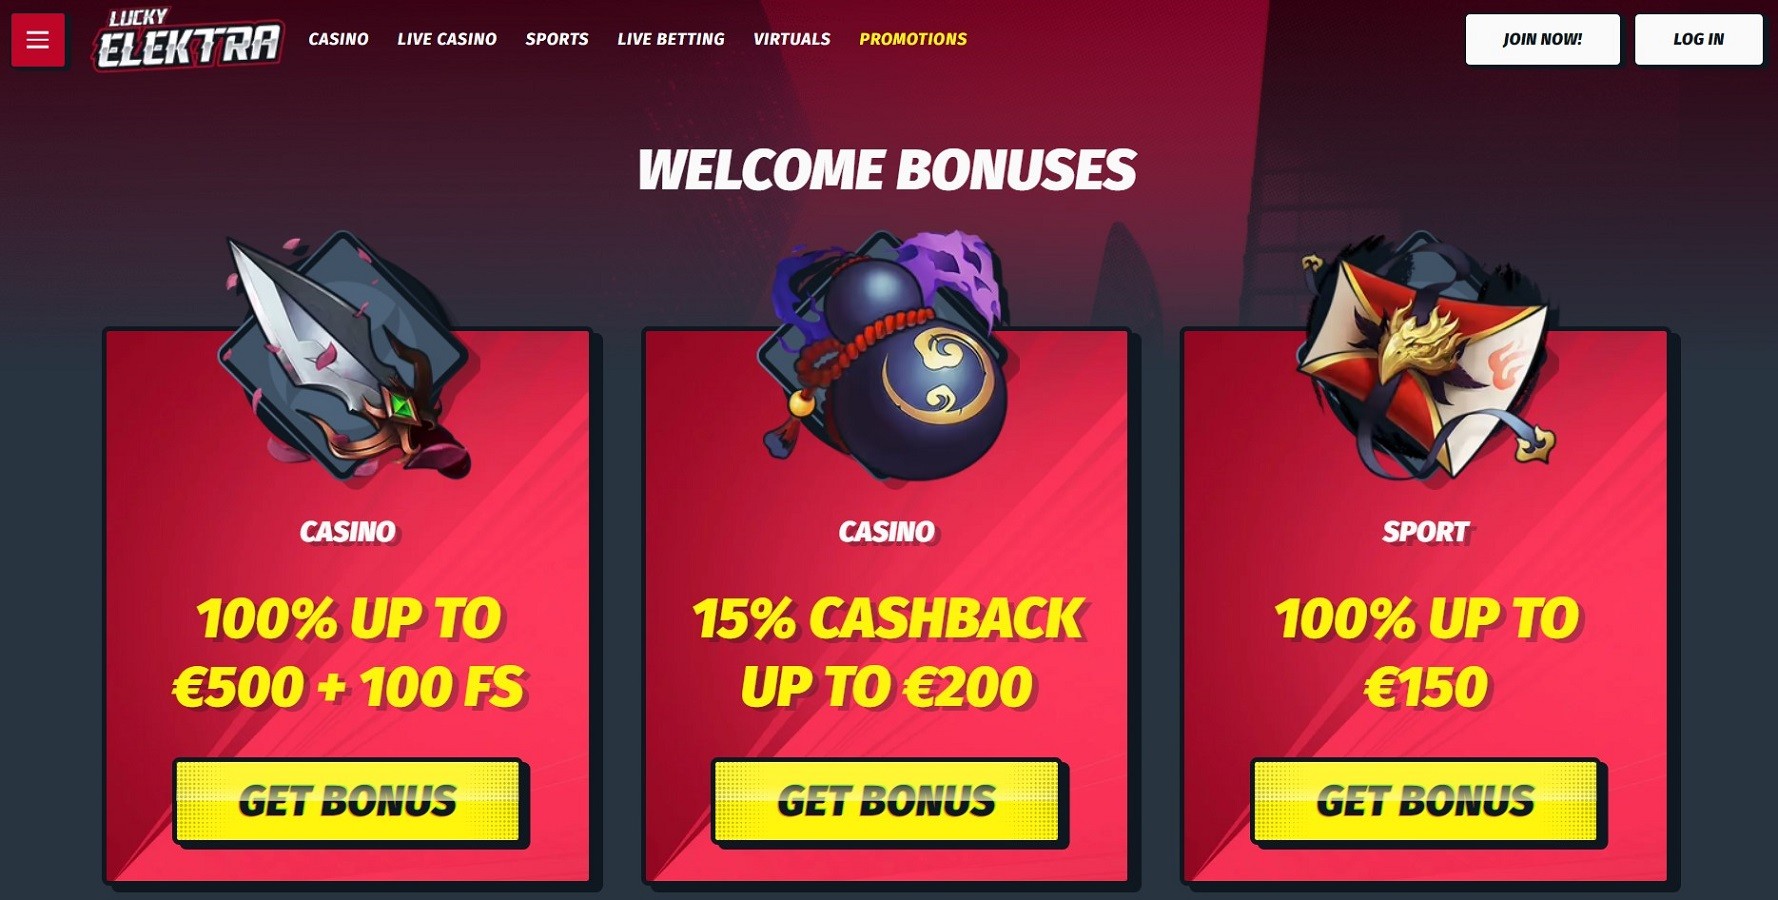 LuckyElektra Casino Bonuses and Promotions